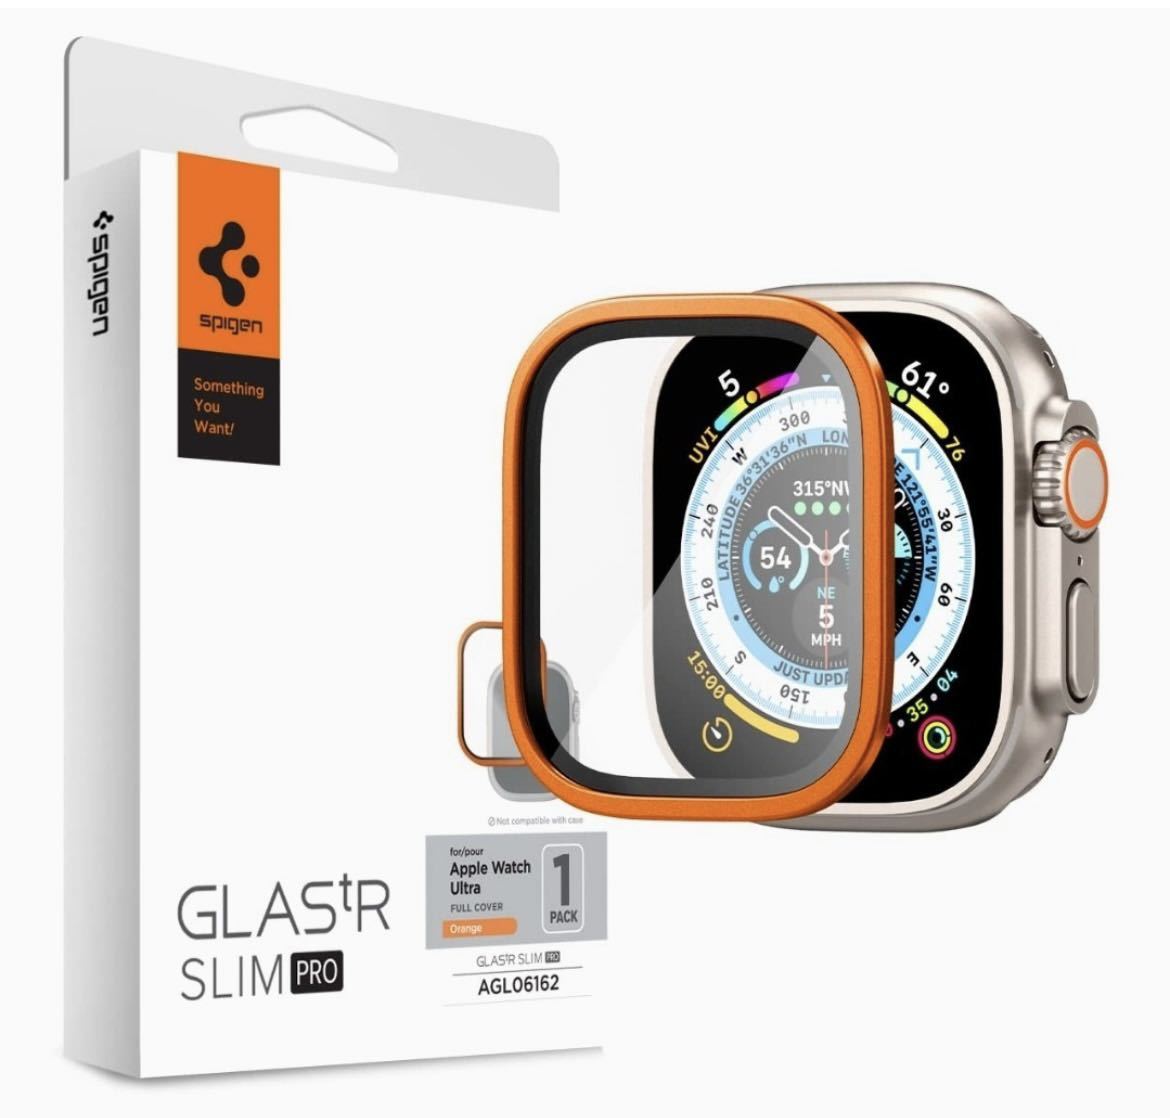 Spigen Glas tR Slim Pro 保護バンパー ガラスフィルム Apple Watch Ultra 49mm 用 アルミニウム枠 一体型 保護 フィルム オレンジ 1枚_画像1